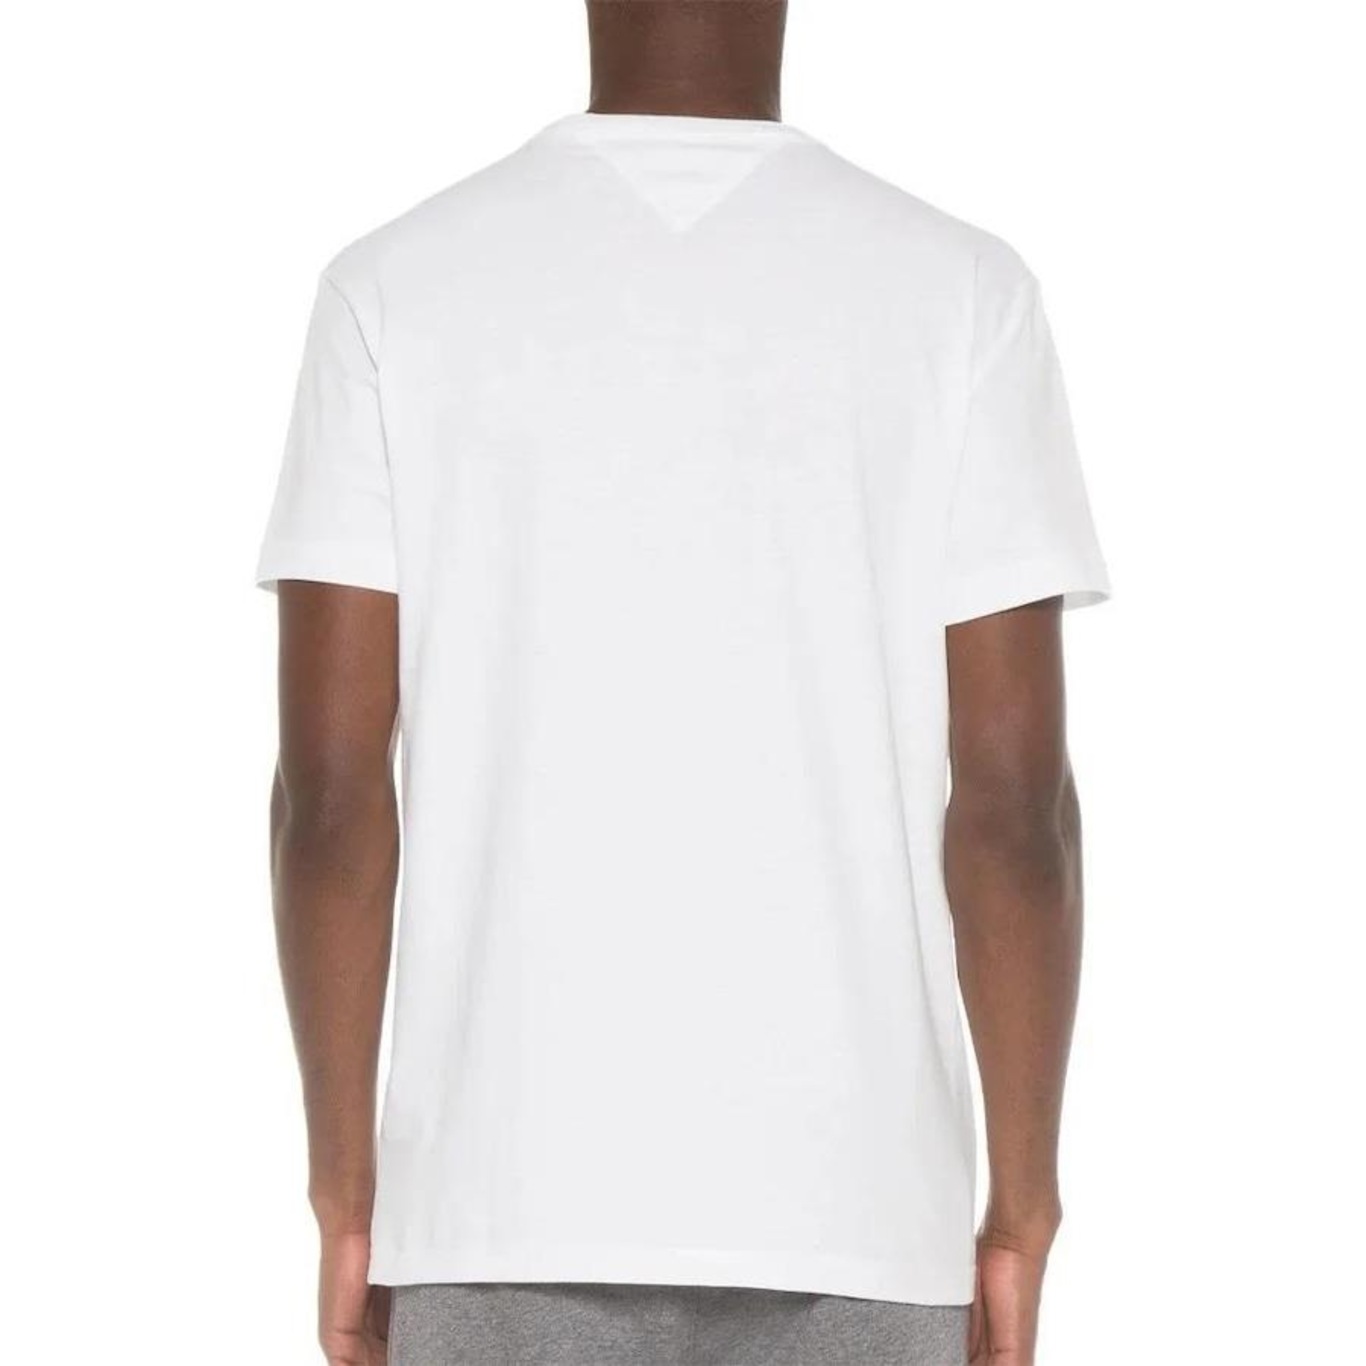 Camiseta Tommy Hilfiger Masculina Core Logo Tee Branca - Sea